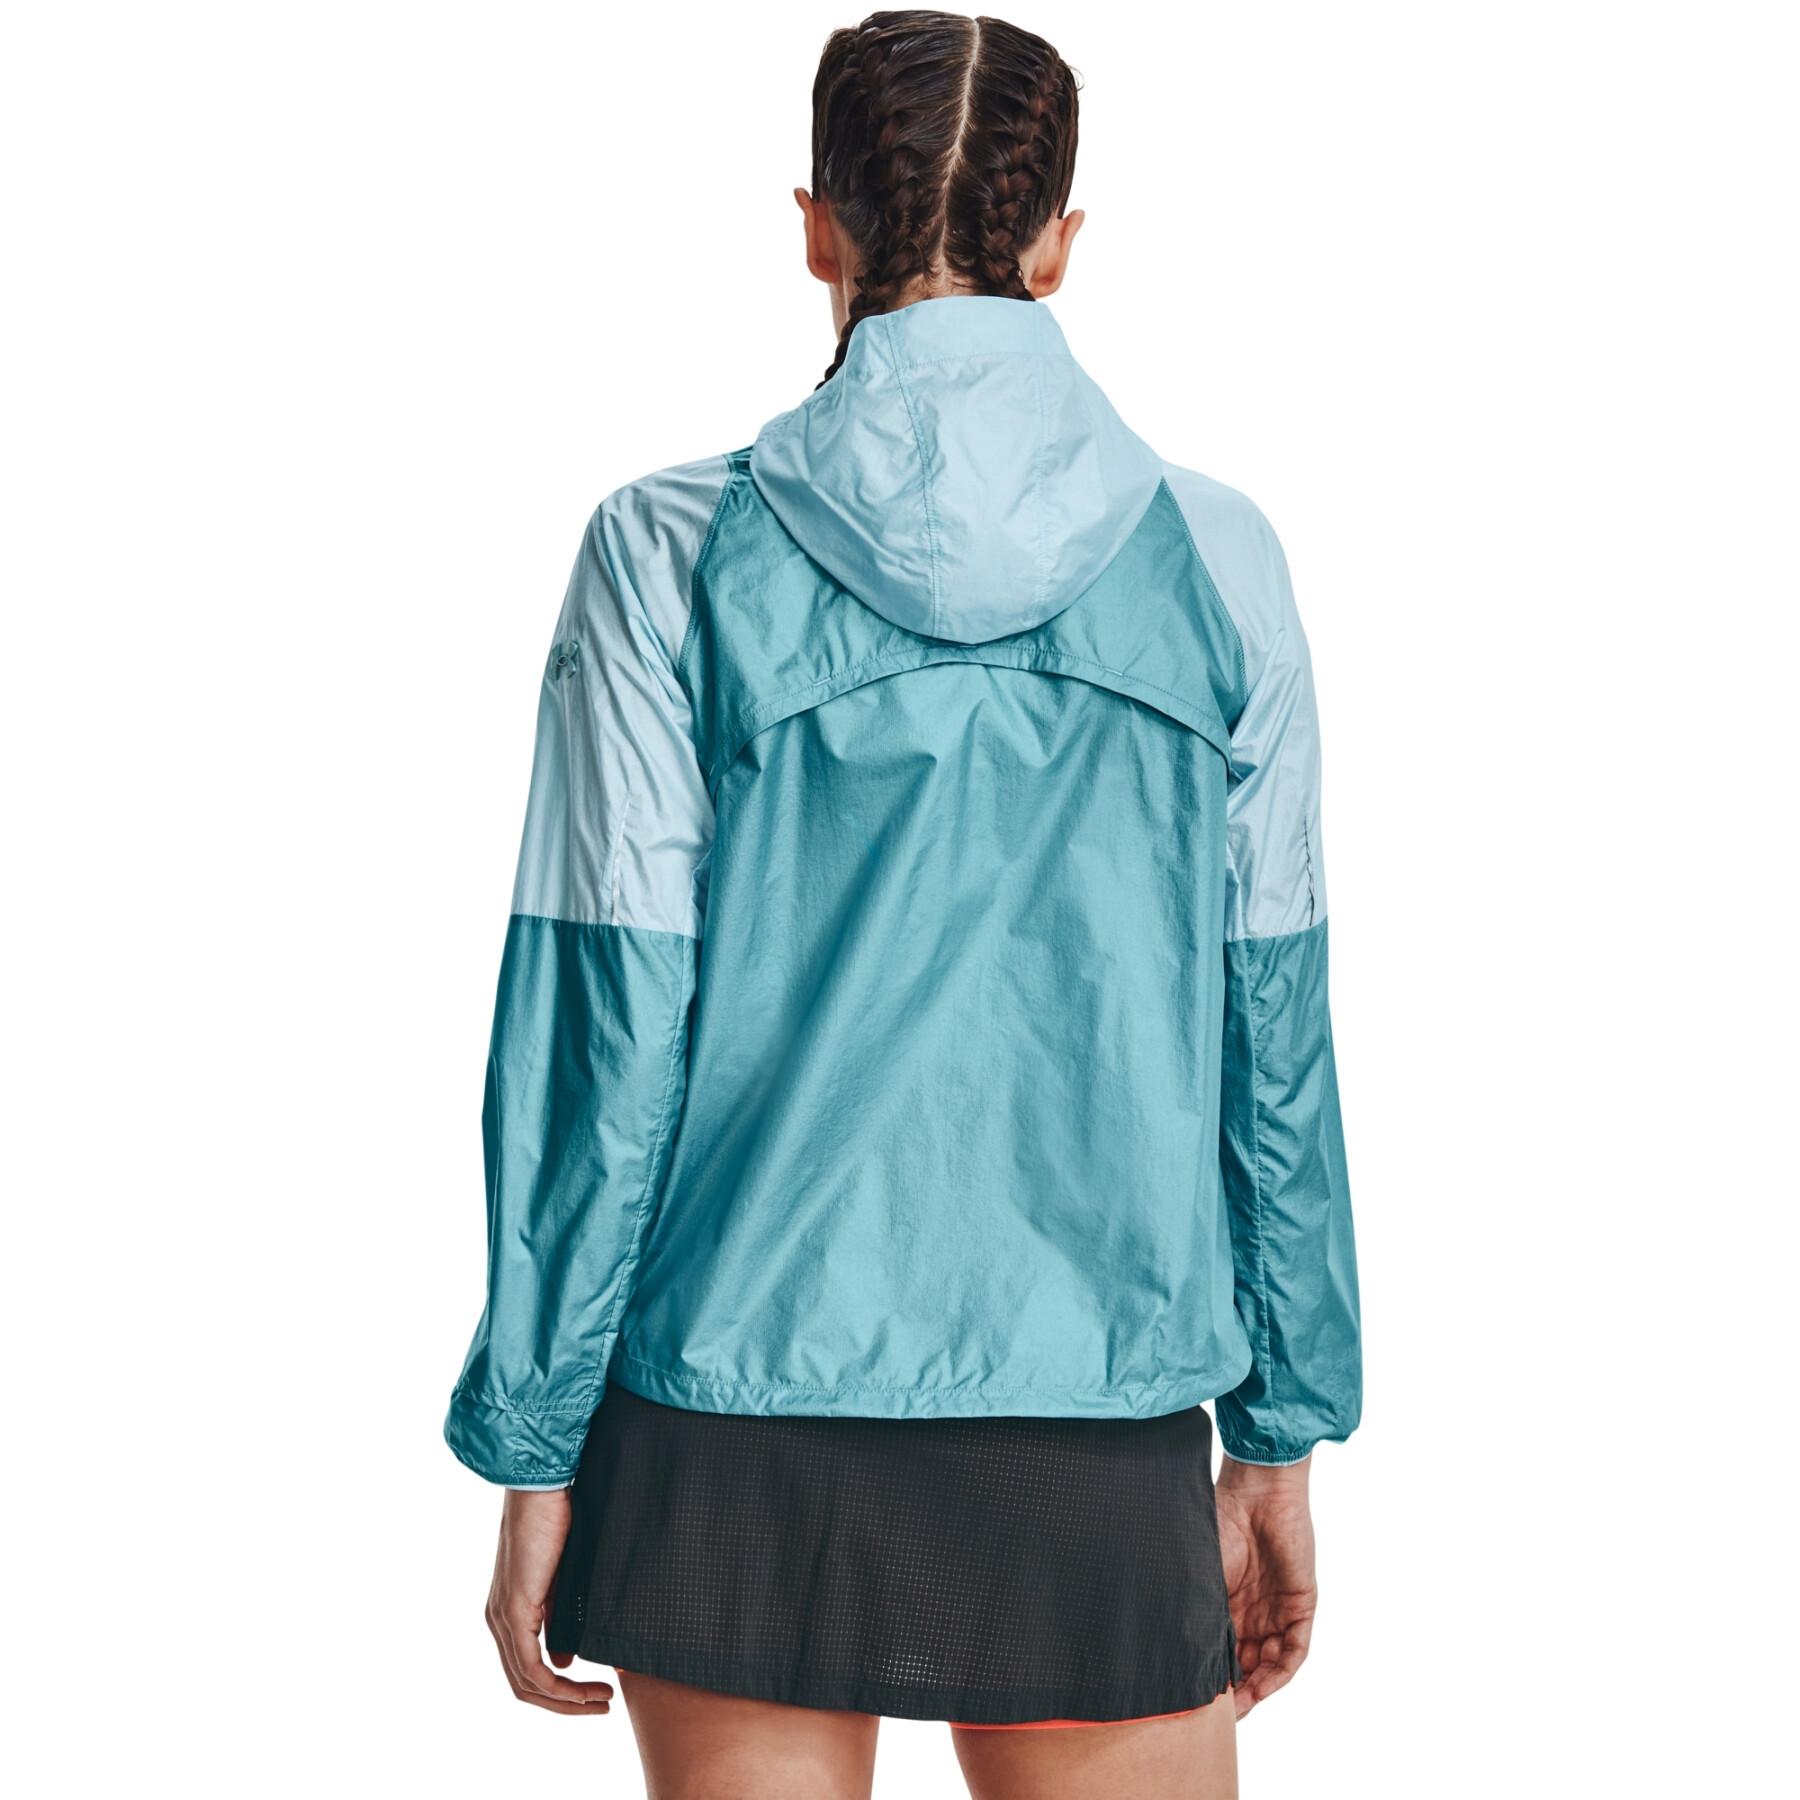 Women's waterproof jacket Under Armour Impasse trail